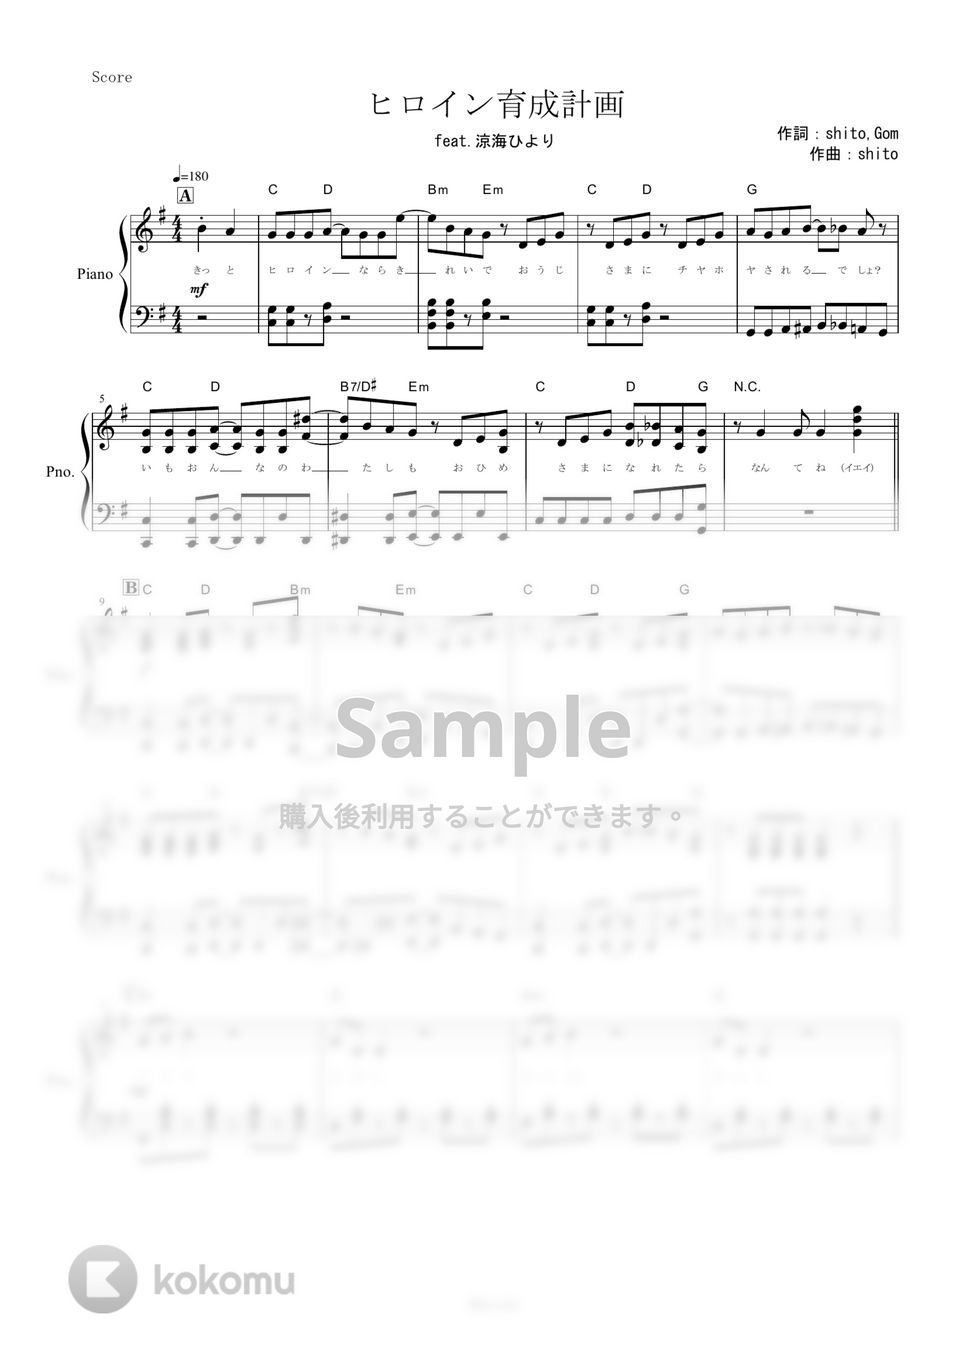 HoneyWorks - ヒロイン育成計画 (ピアノ楽譜/全７ページ) by yoshi